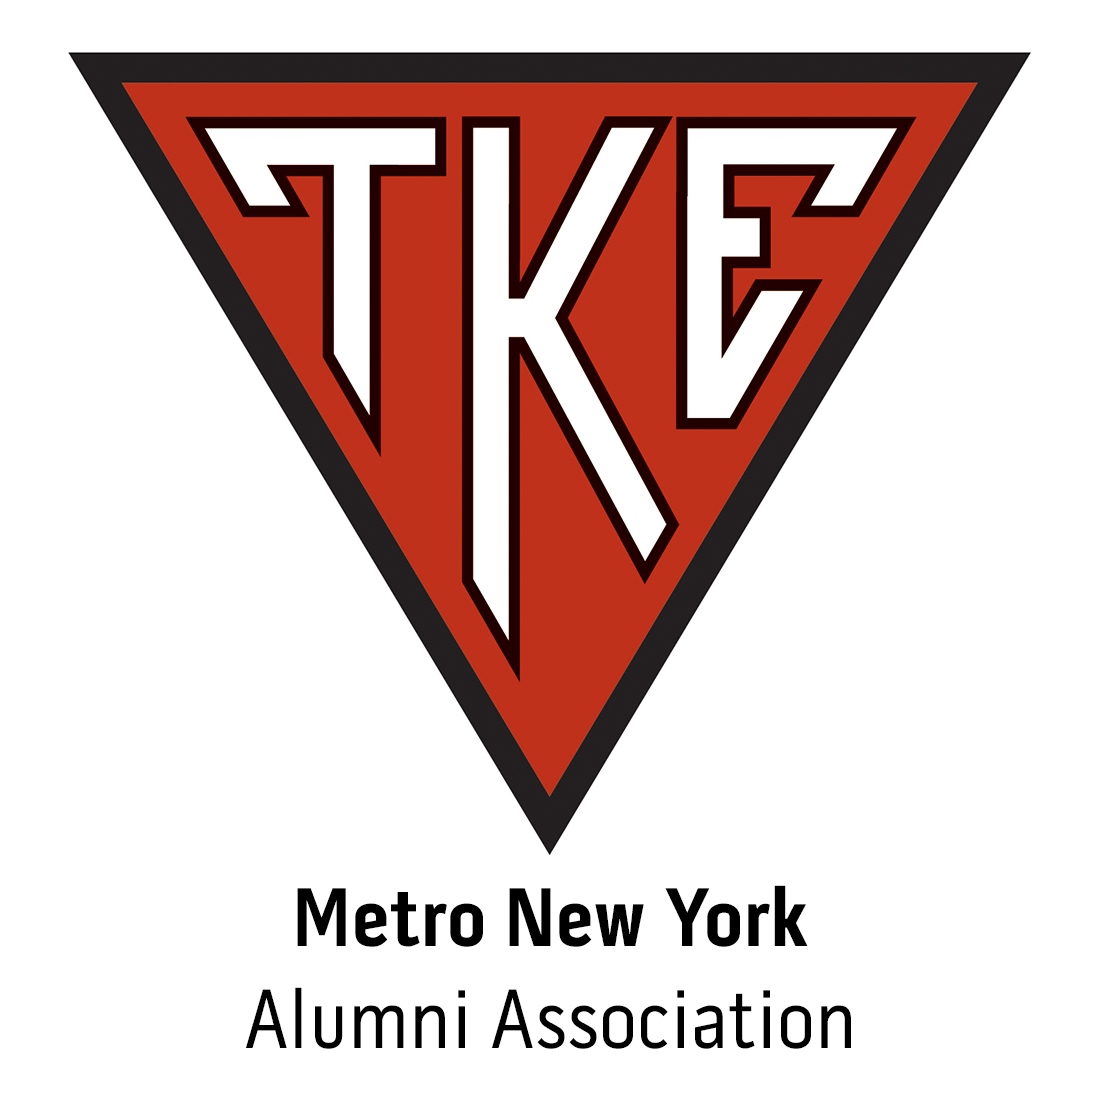 Metro New York Alumni Association for New York